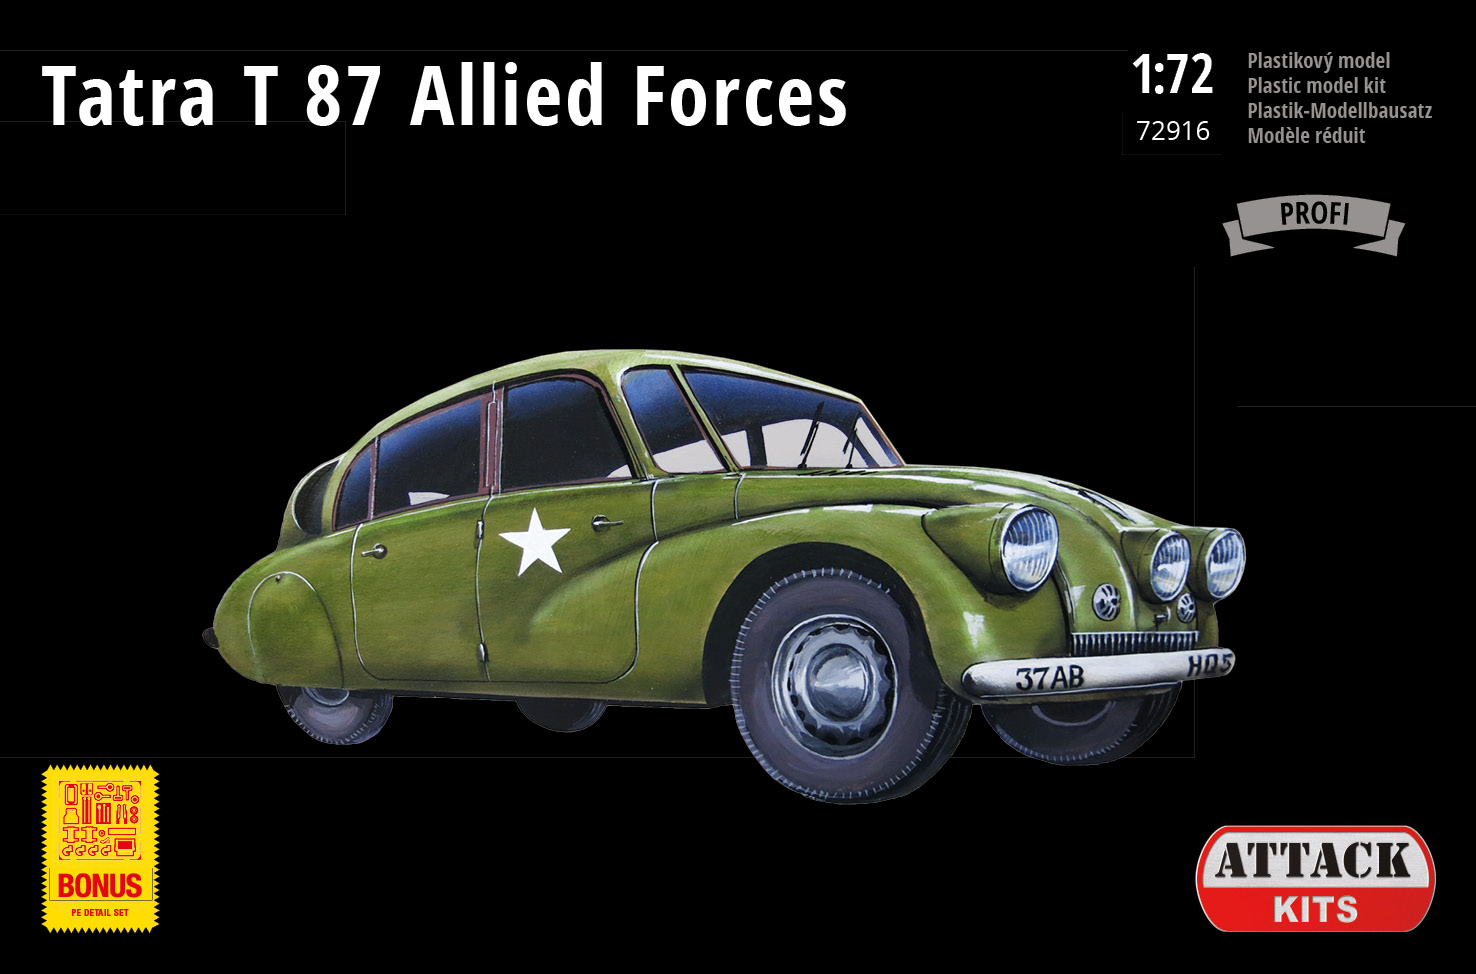 Tatra 87 Allied service